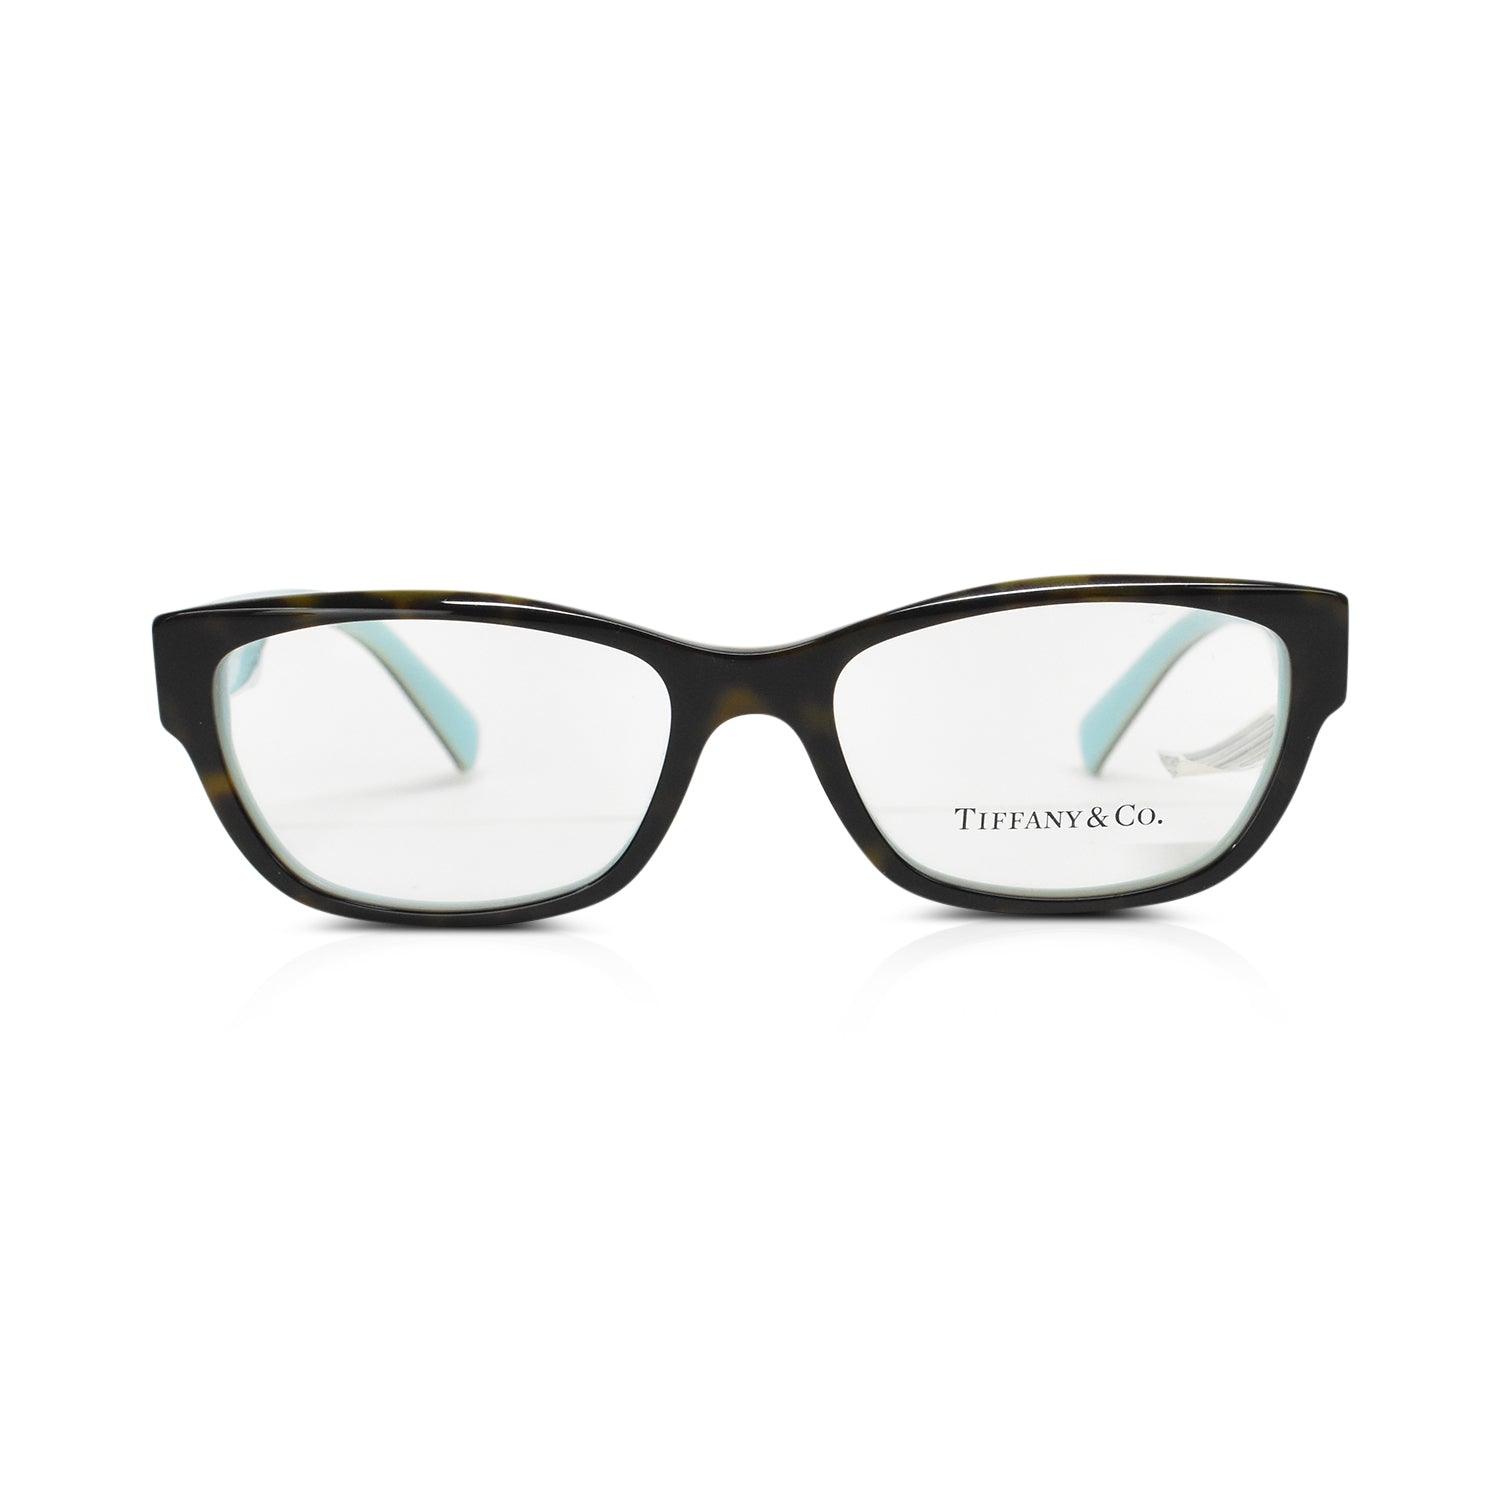 Tiffany & Co. Reading Glasses - Fashionably Yours